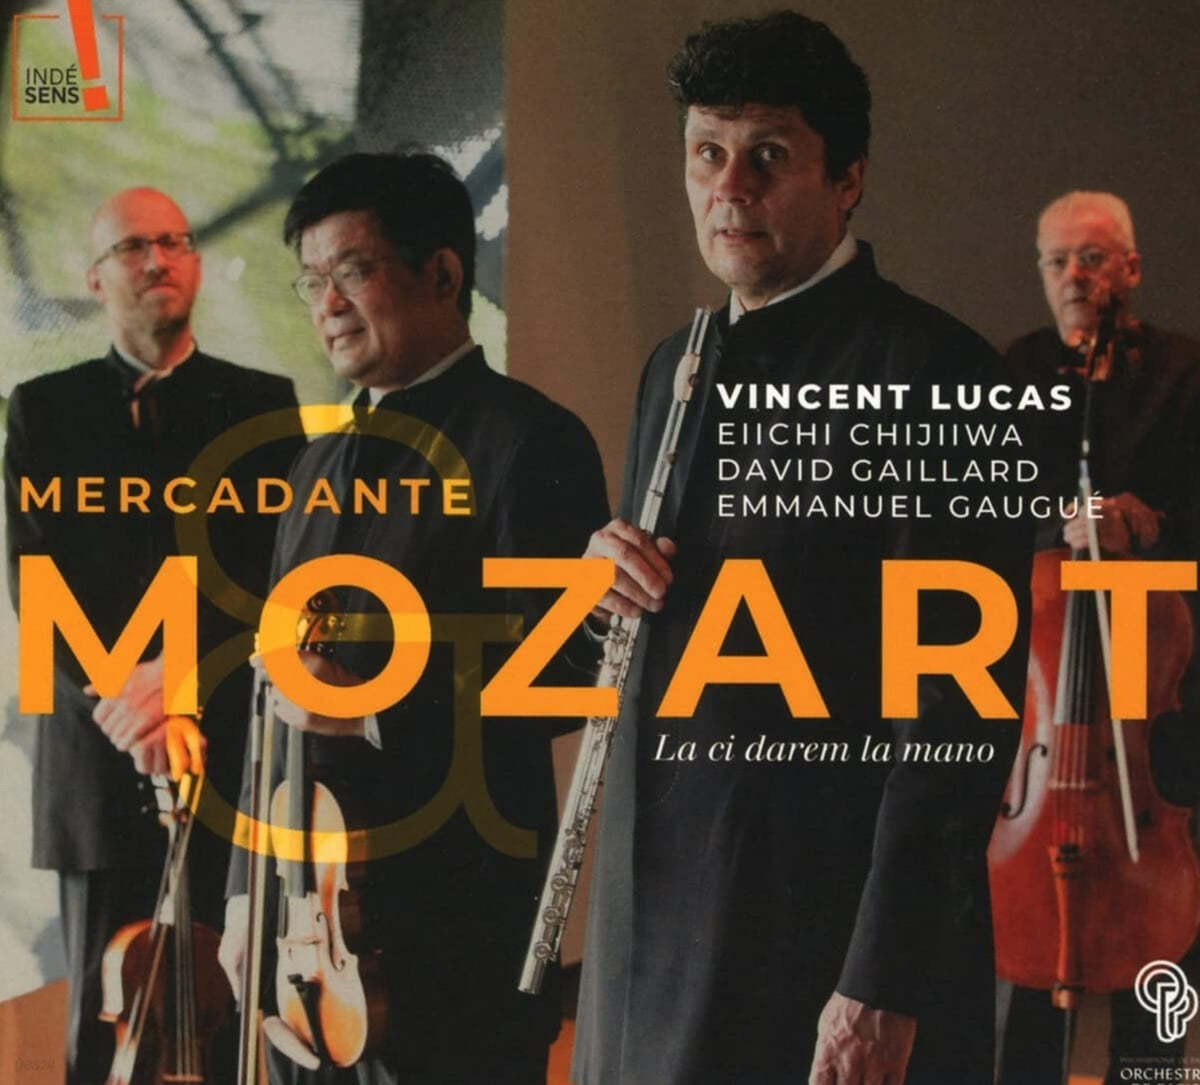 Vincent Lucas 모차르트 / 메르카단테: 플루트 사중주 (Mercadnate / Mozart: Flute Quartet)